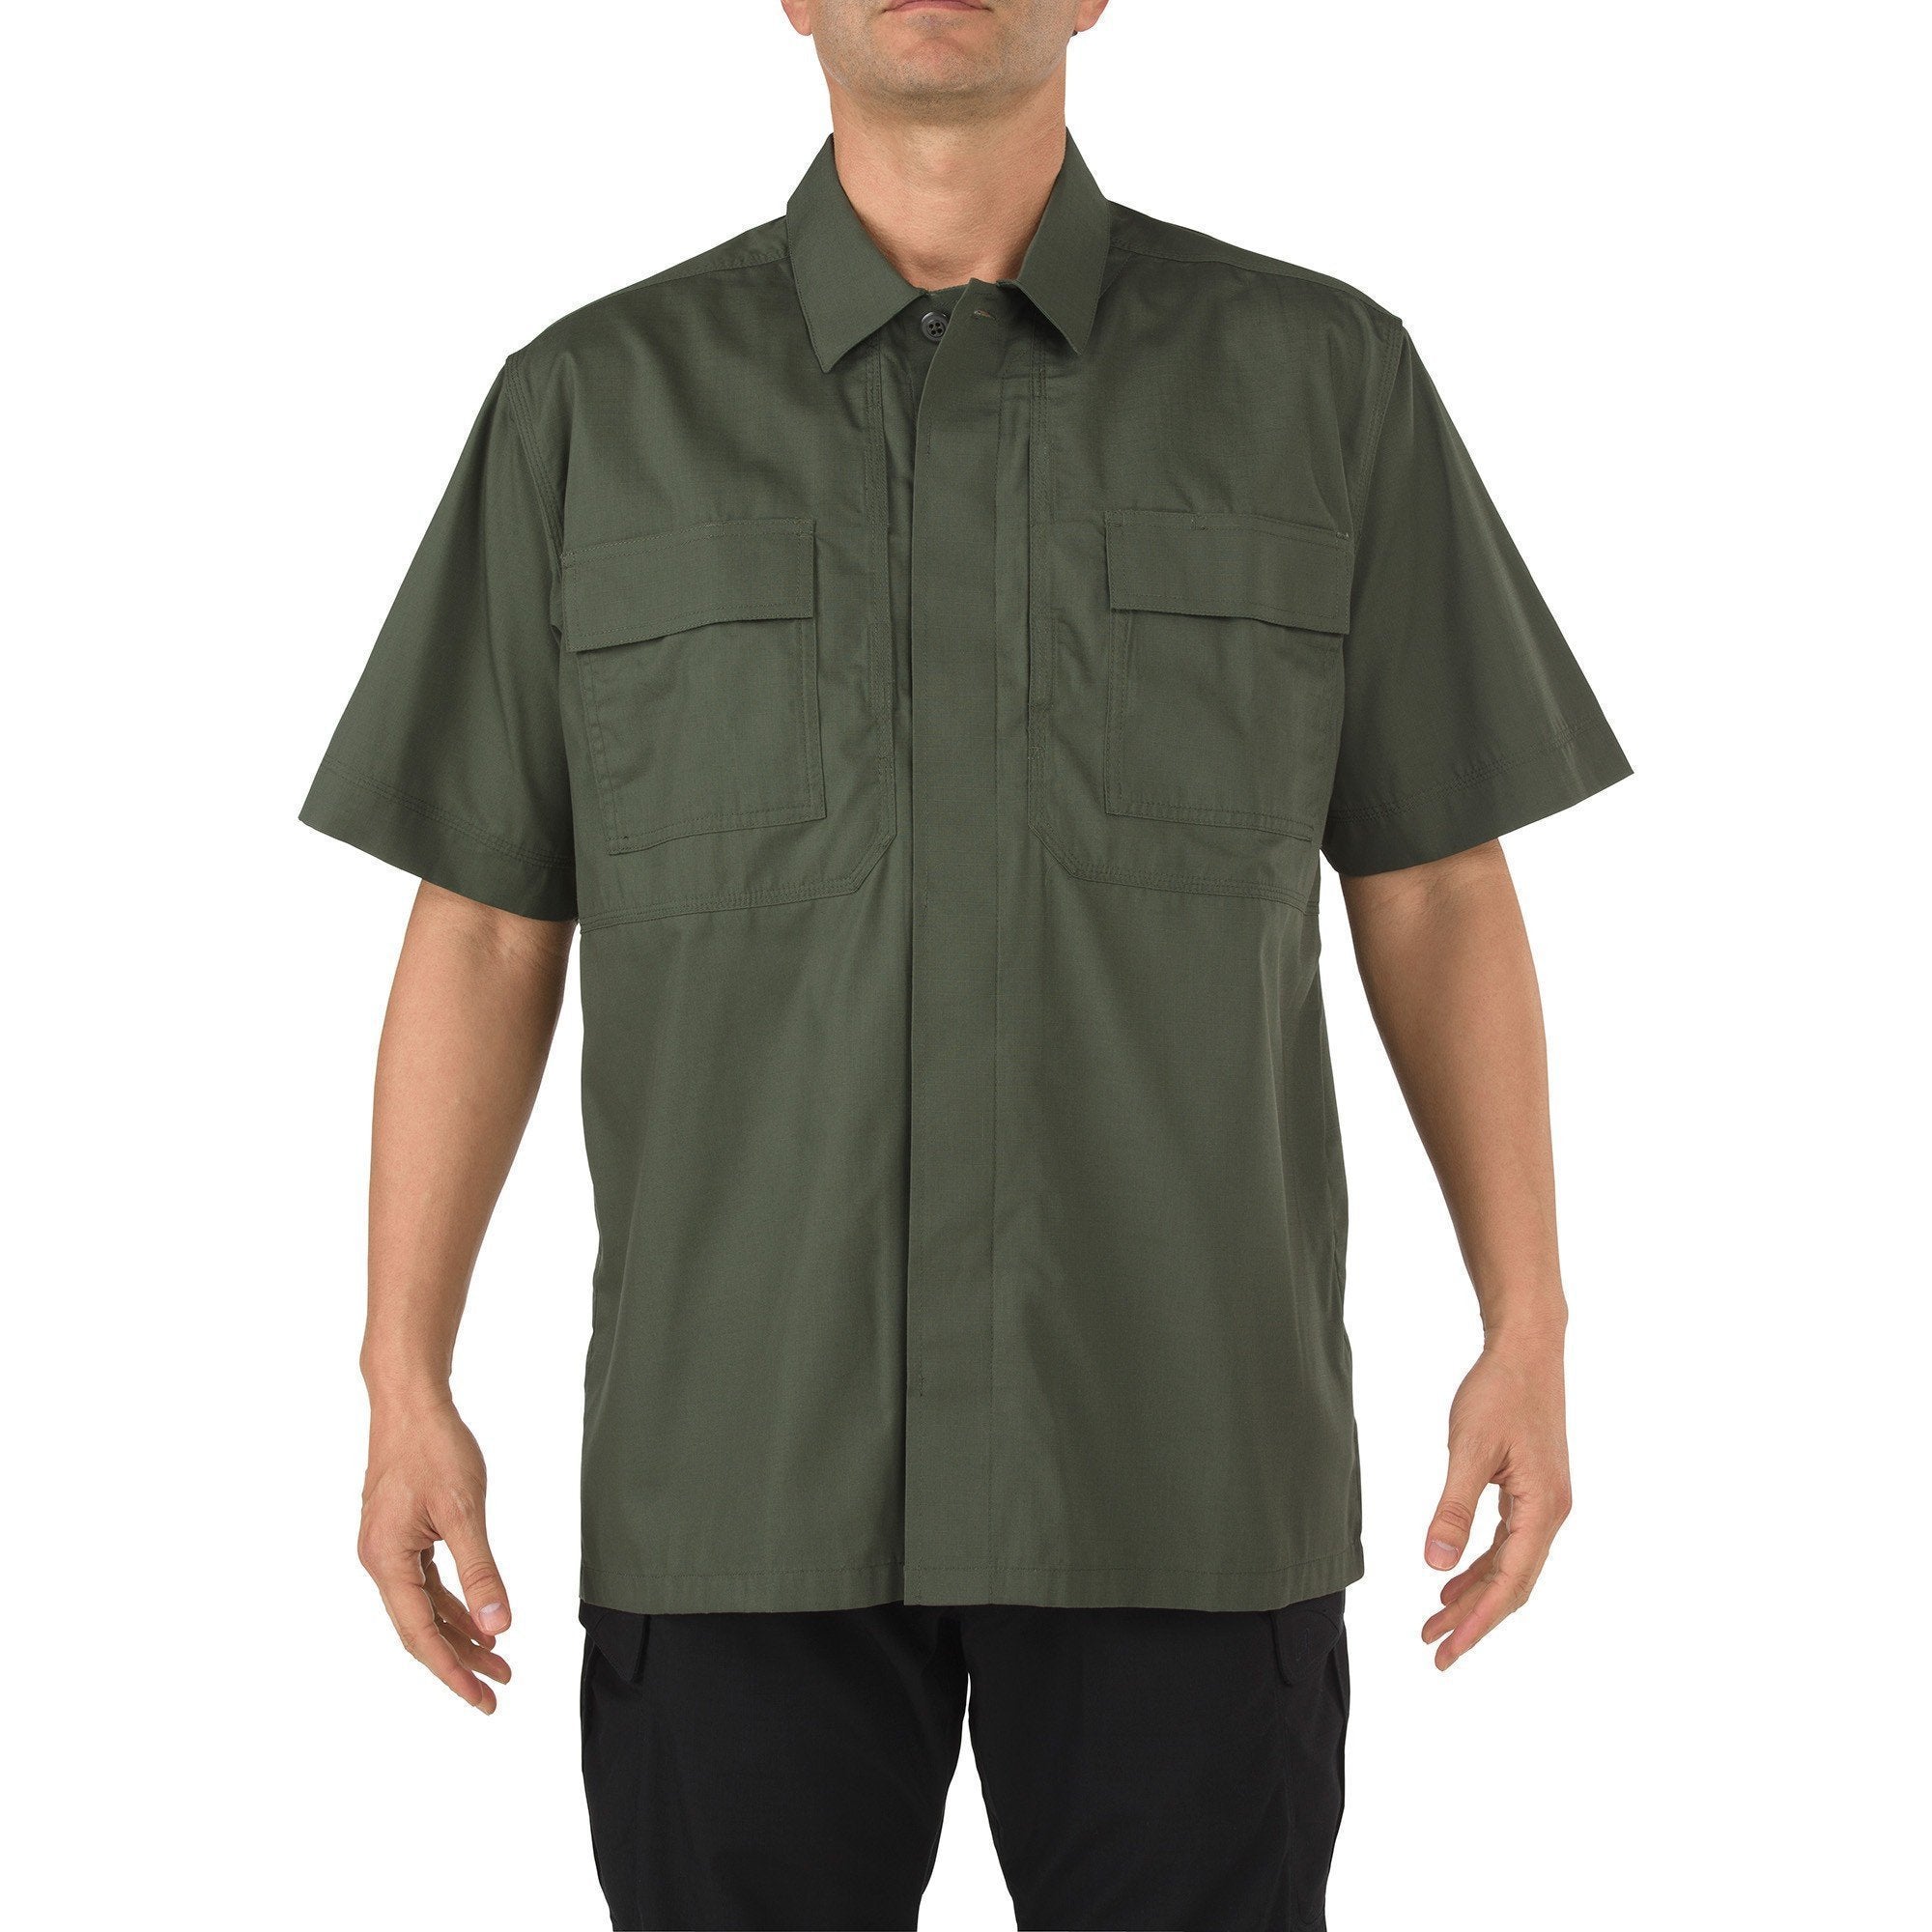 5.11 Tactical Taclite TDU Short Sleeve Shirt Shirts 5.11 Tactical Tactical Gear Supplier Tactical Distributors Australia